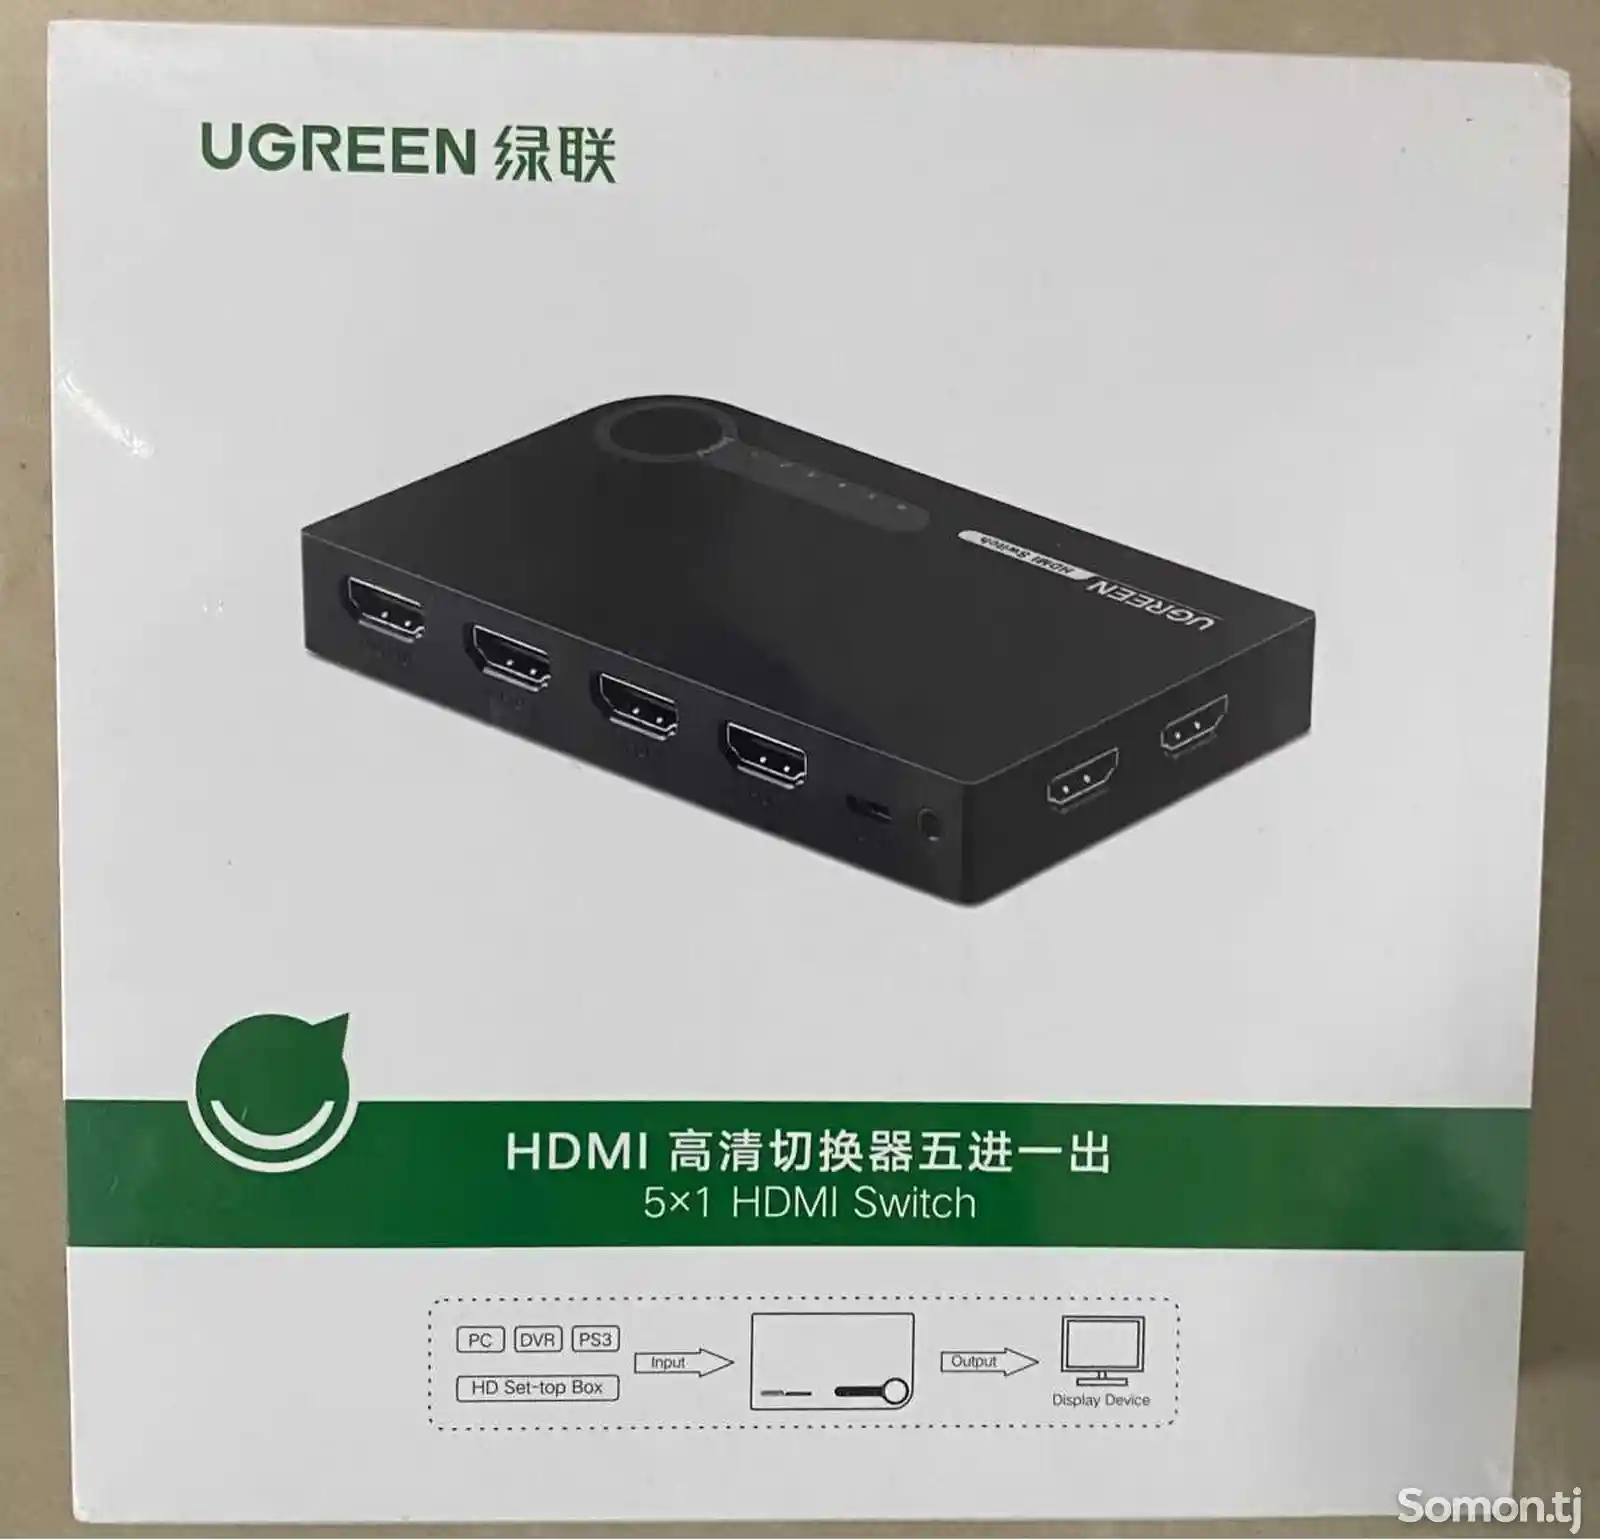 Ugreen HDMI Switcher 5x1-1